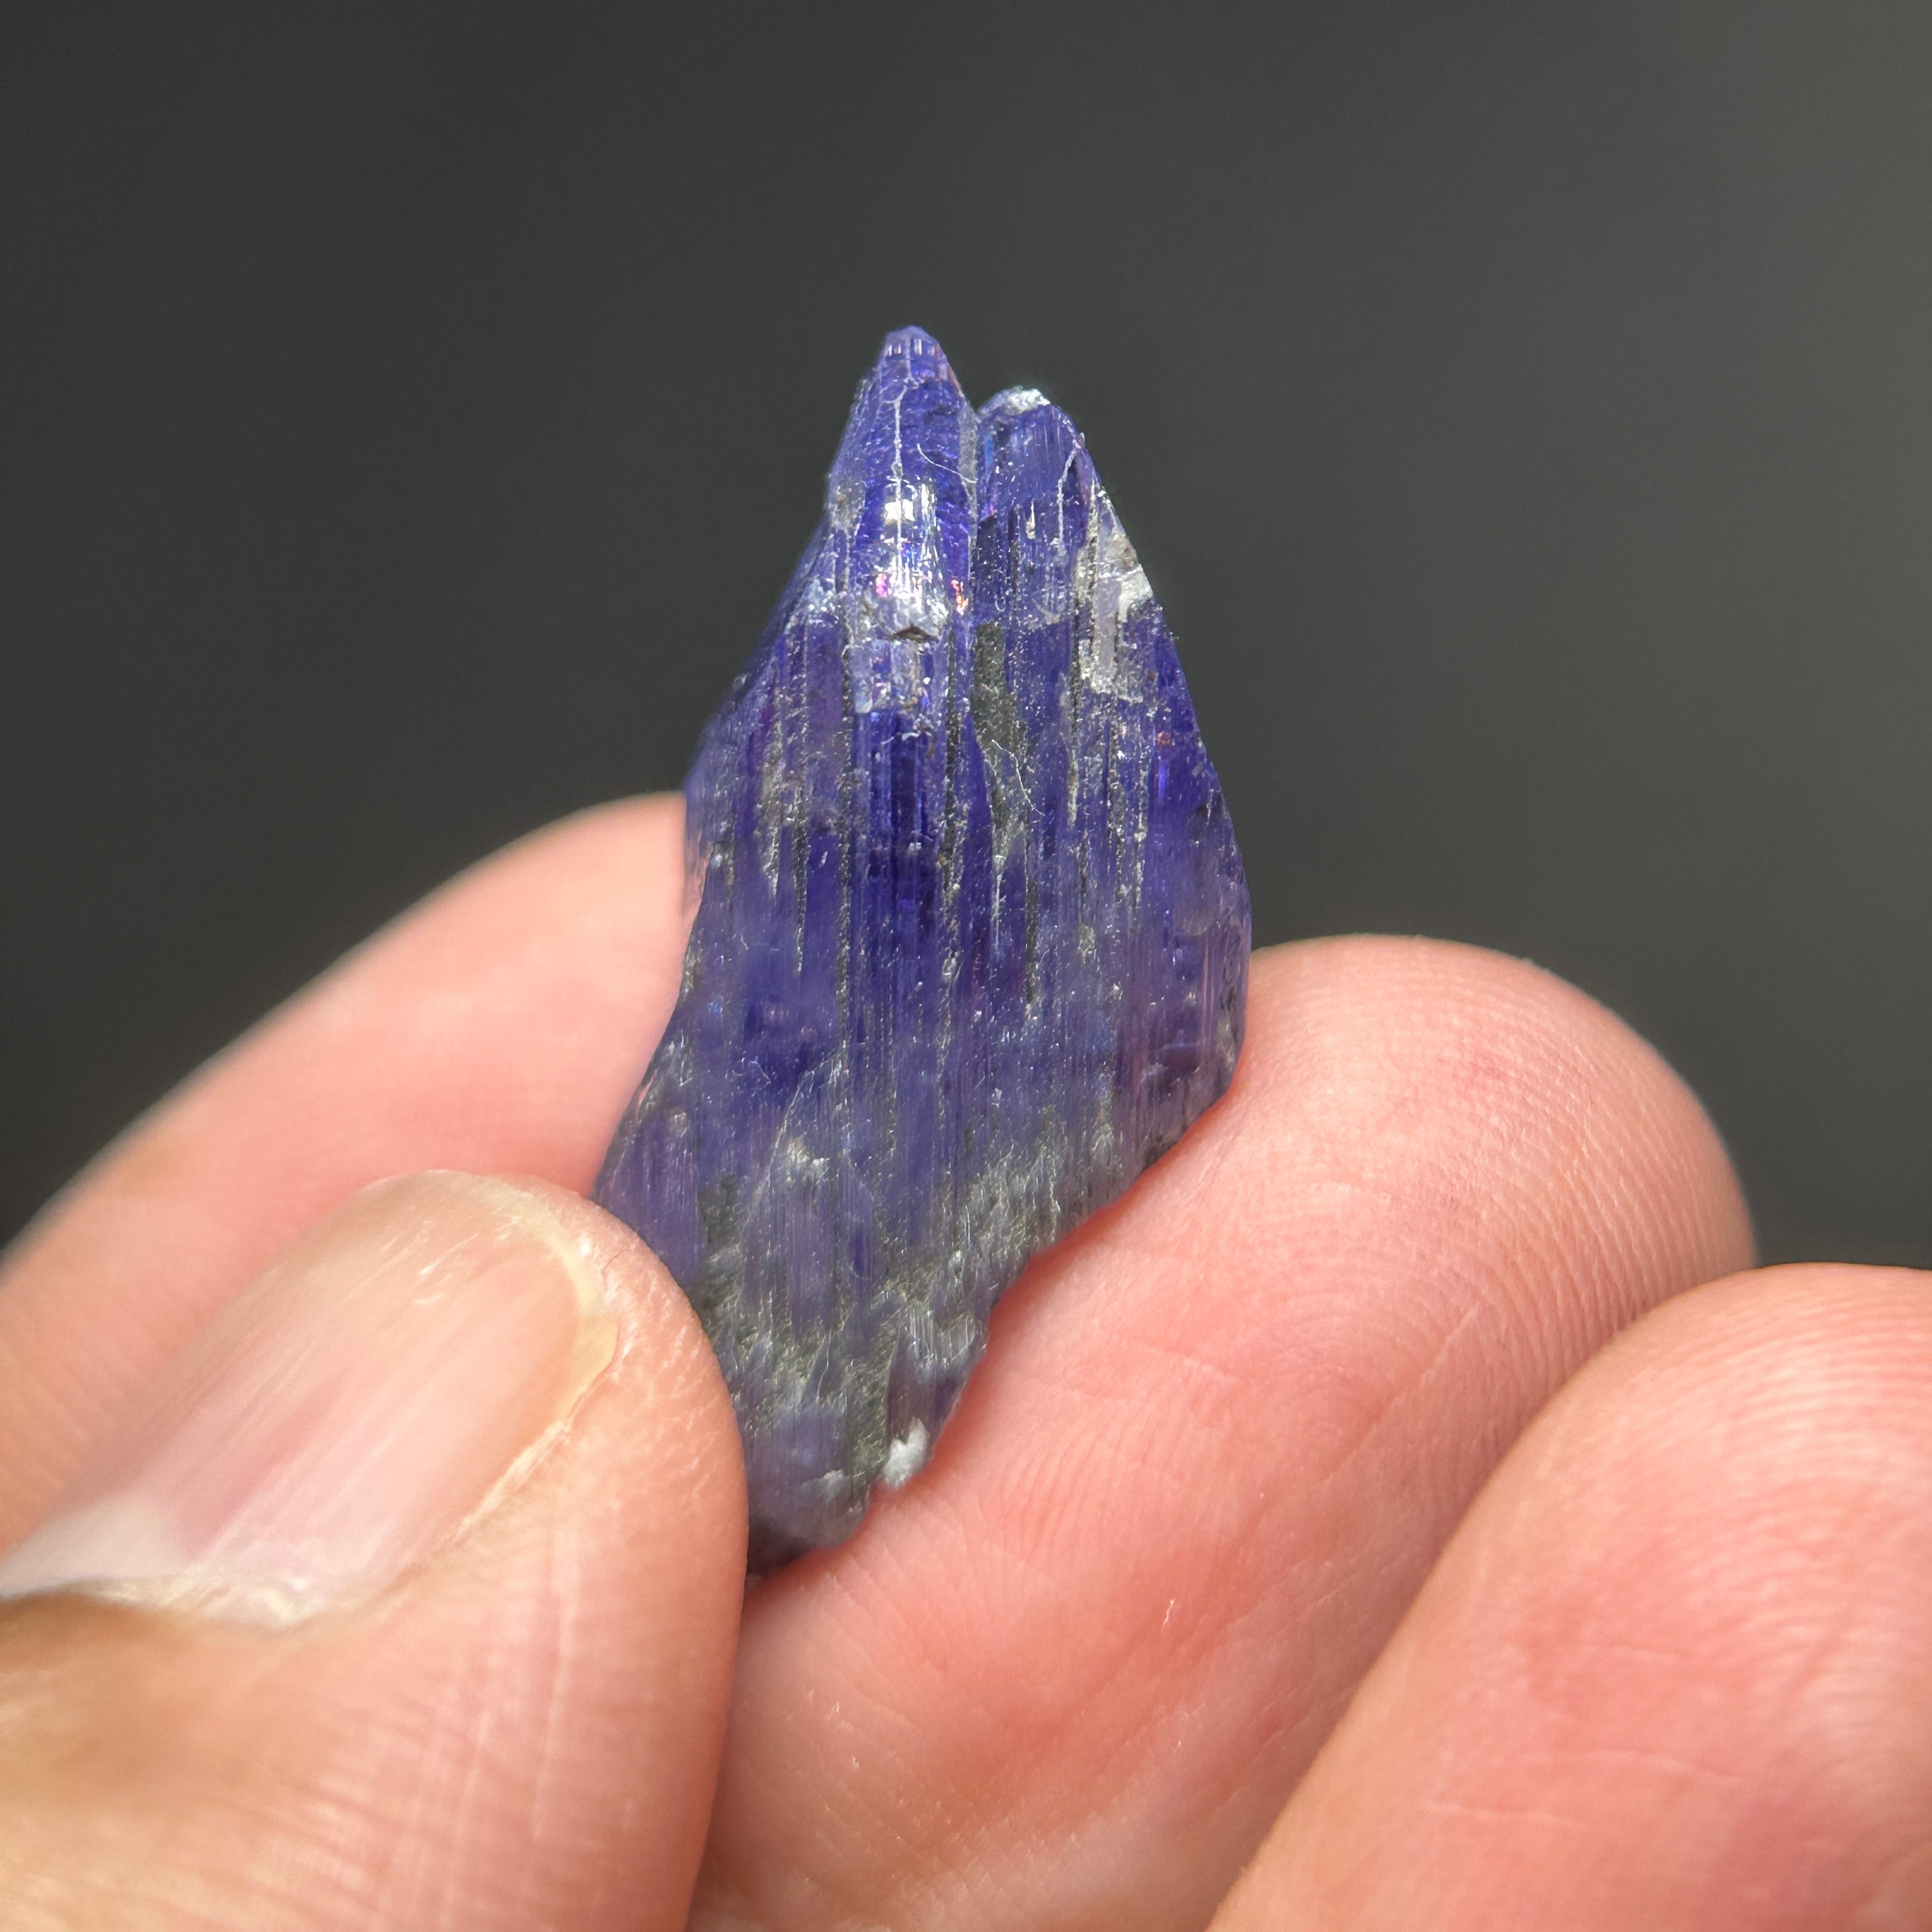 22.14ct Tanzanite Crystal, Gently Heated, Tanzania